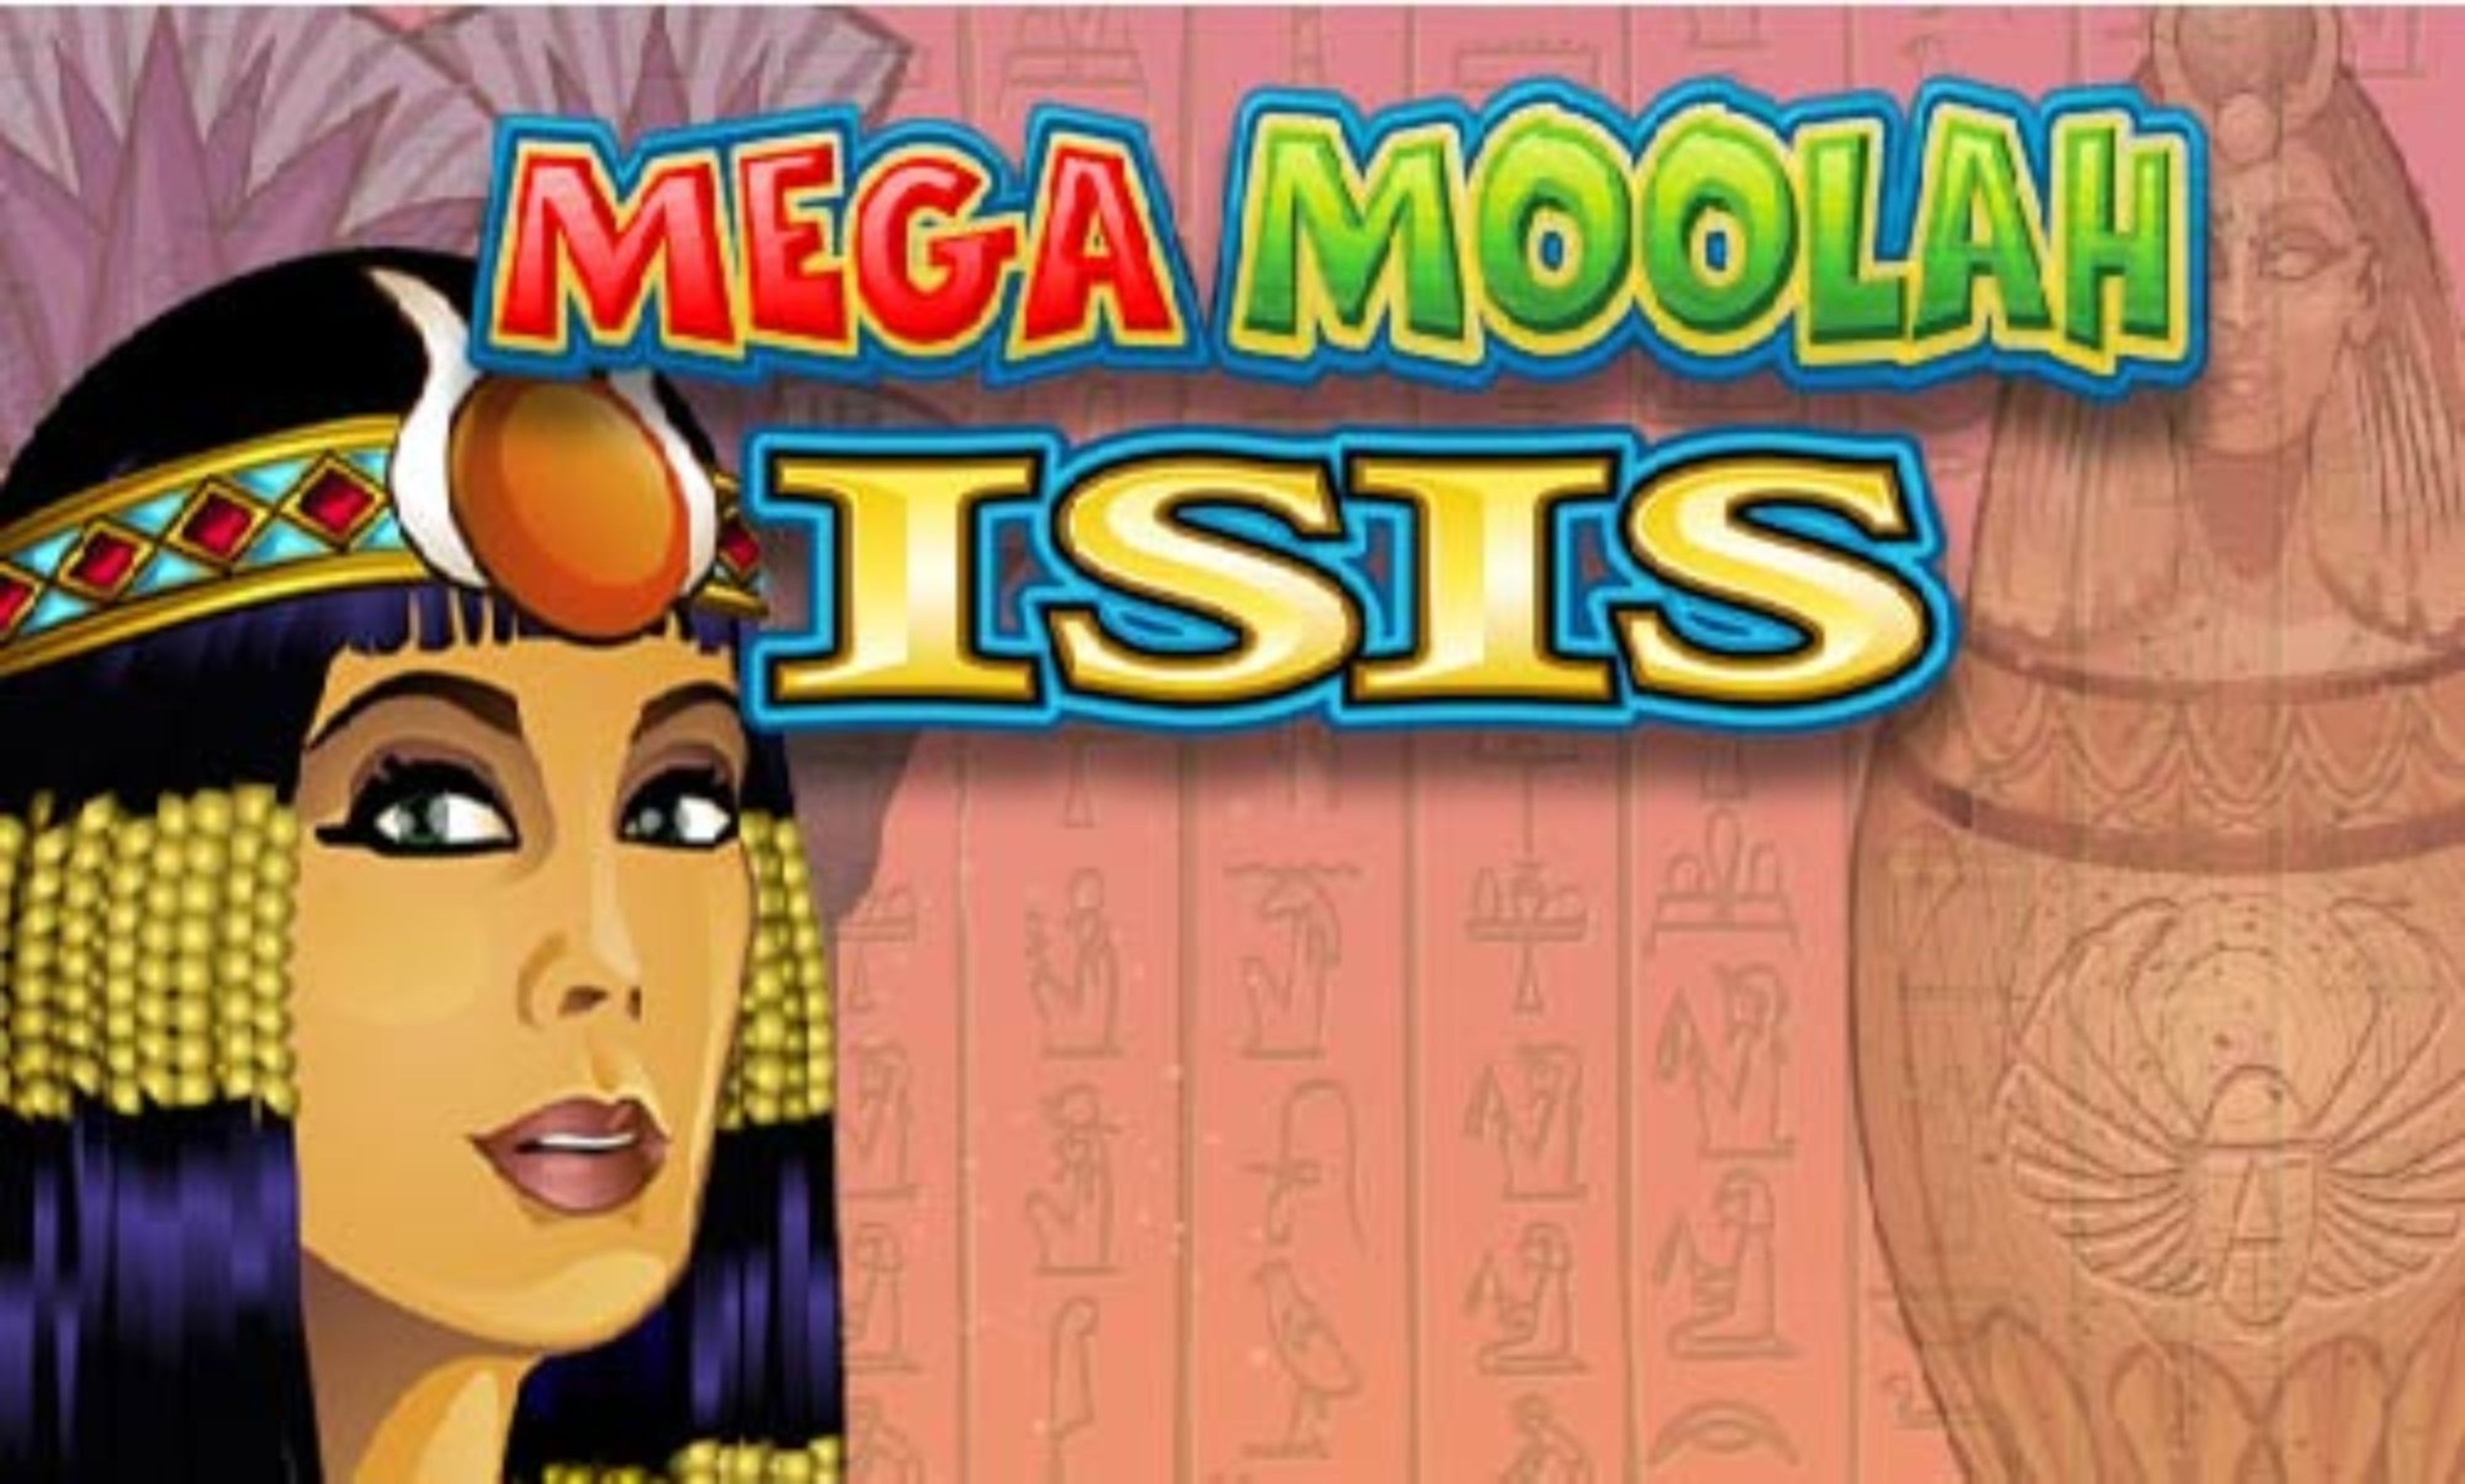 The Mega Moolah Isis Online Slot Demo Game by Microgaming